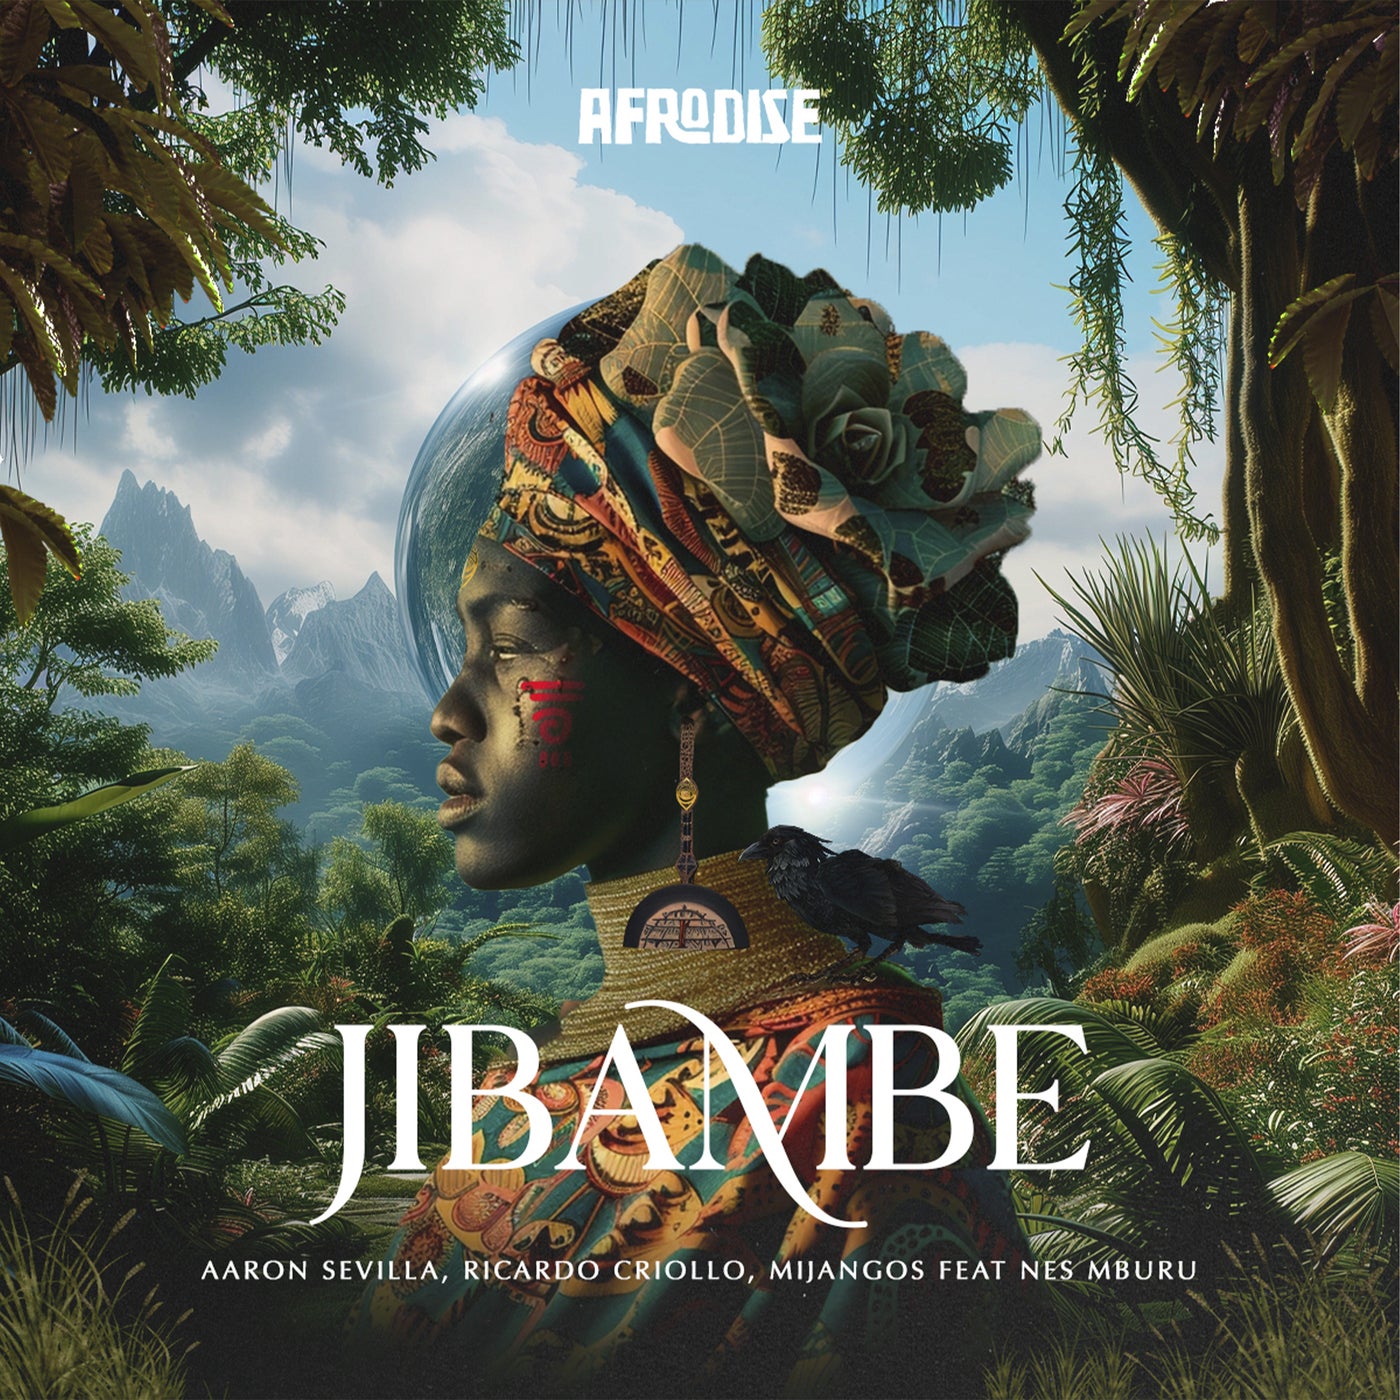 image cover: Mijangos, Aaron Sevilla, Ricardo Criollo House & Nes Mburu - Jibambe on AFRODISE